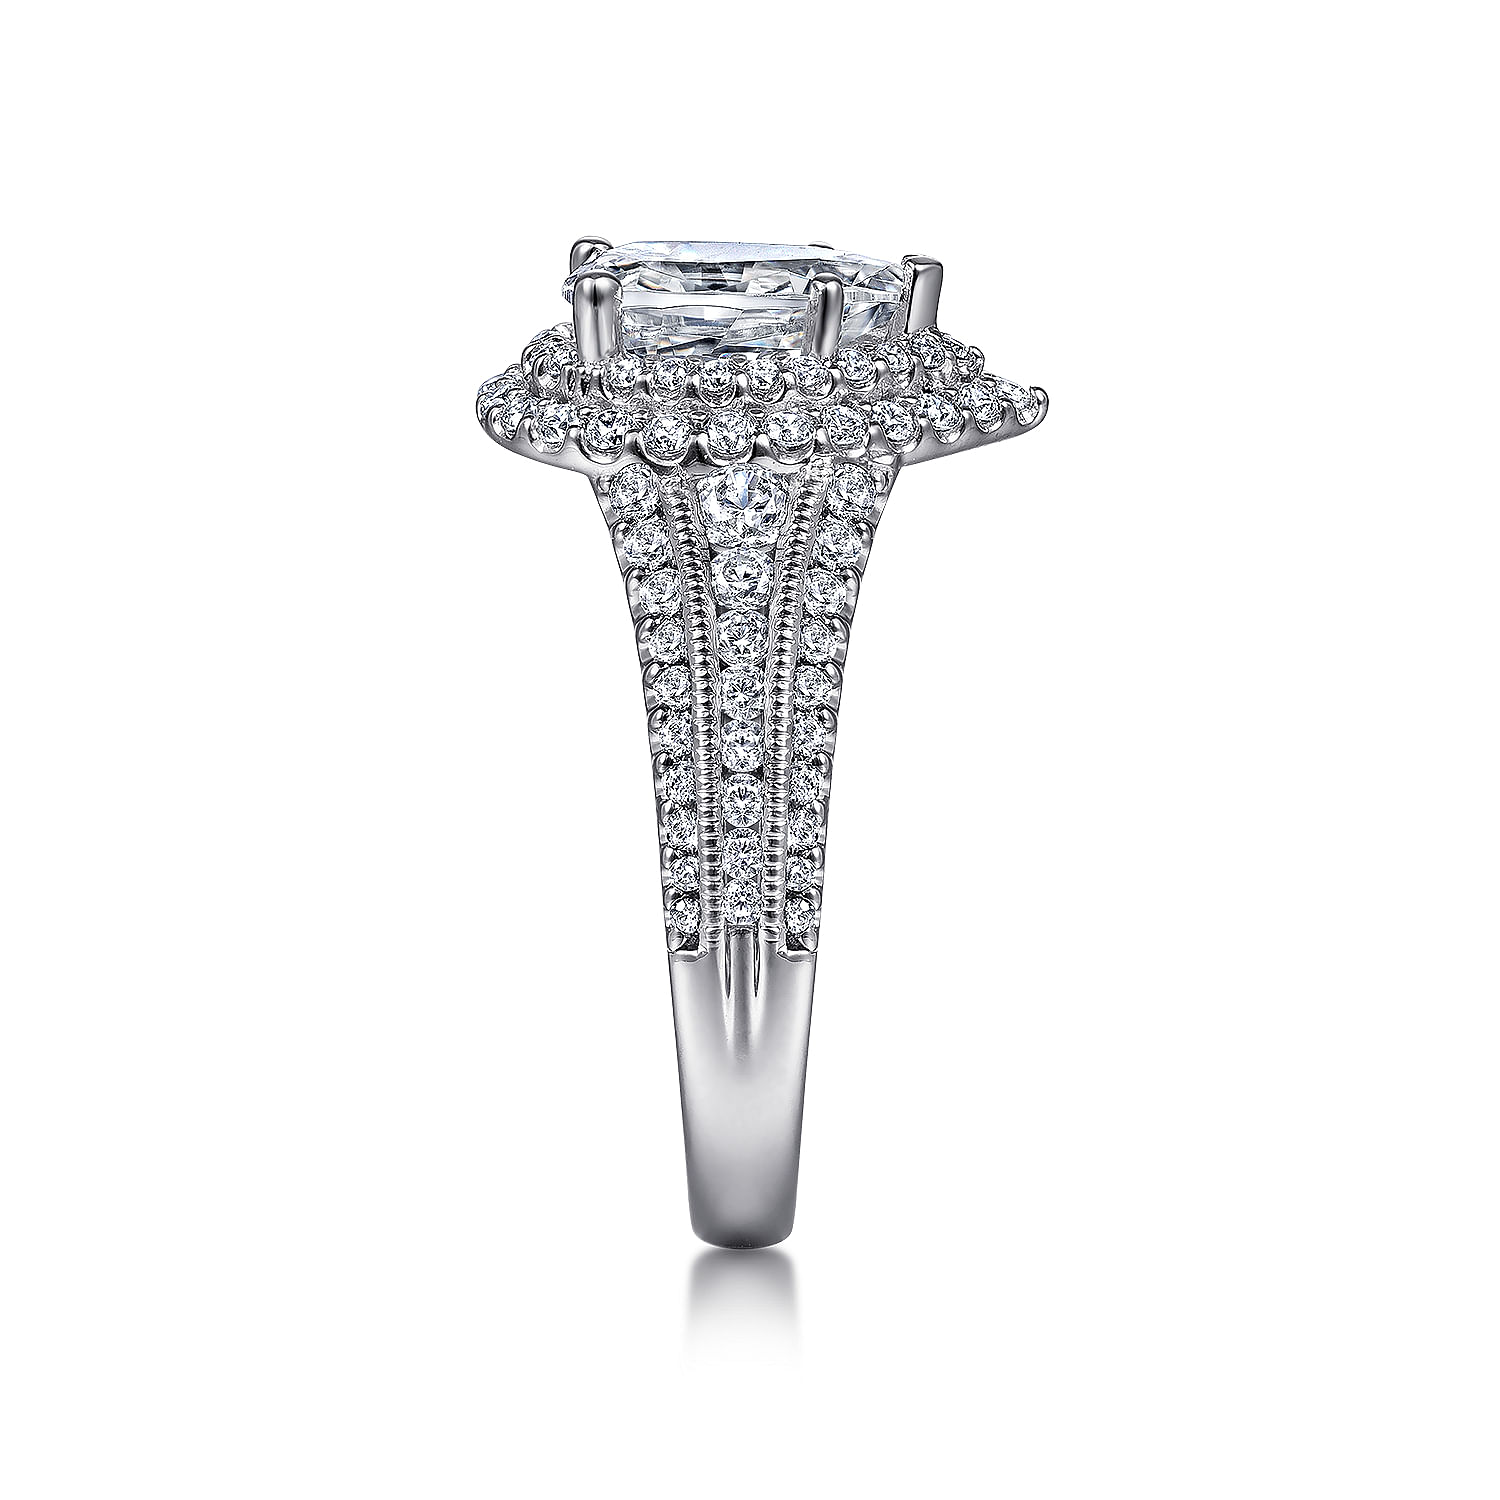 14K White Gold Pear Shape Diamond Channel Set Engagement Ring